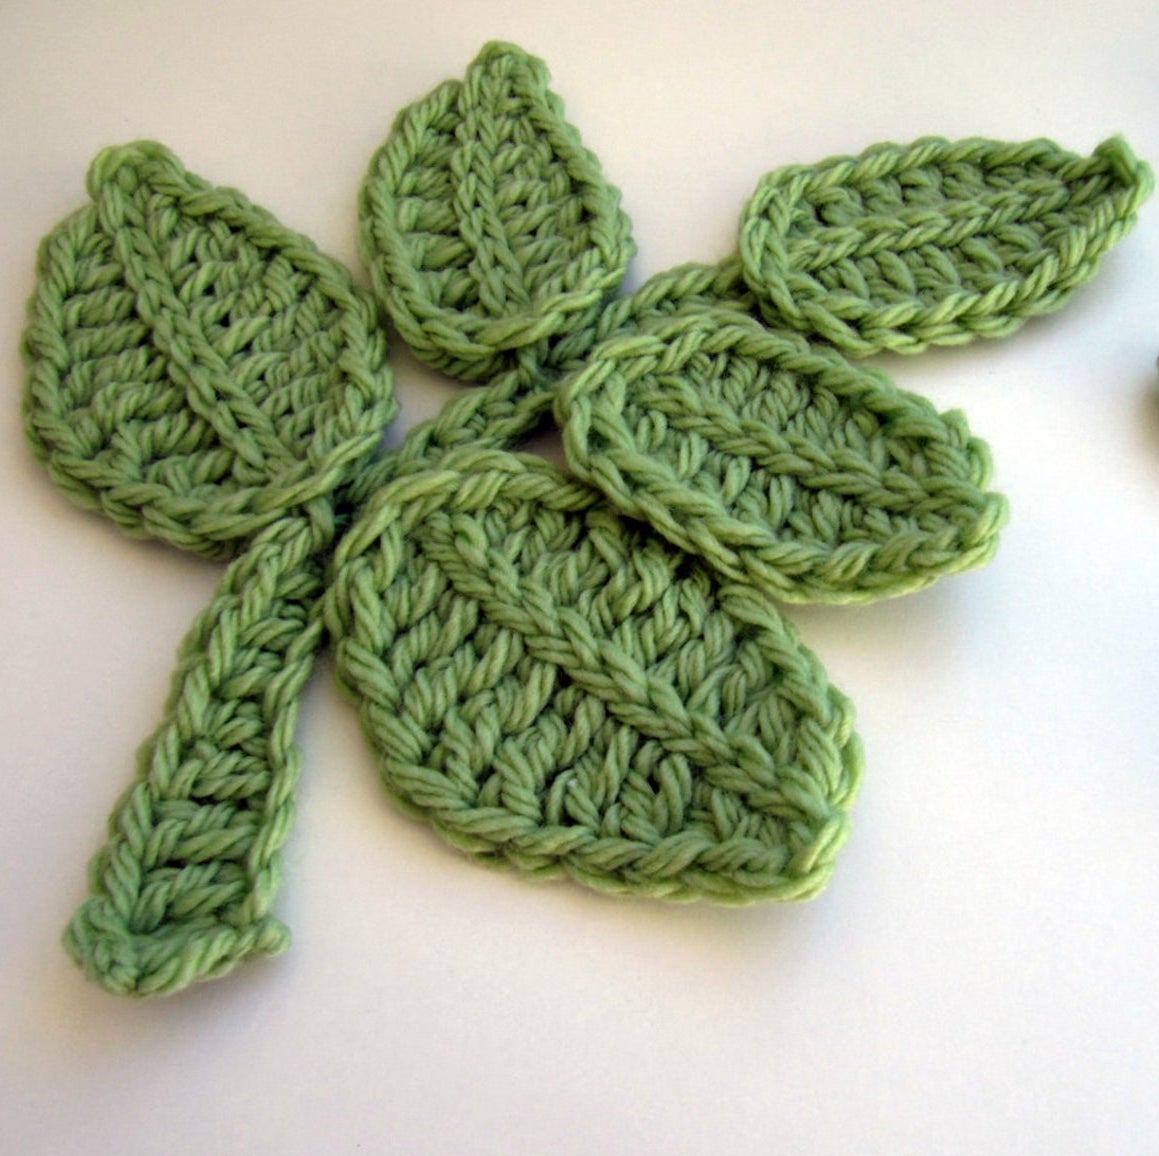 Elliptical Leaf Free Crochet Pattern · Crazy Hands  Crochet leaf patterns,  Crochet leaves, Crochet leaf free pattern